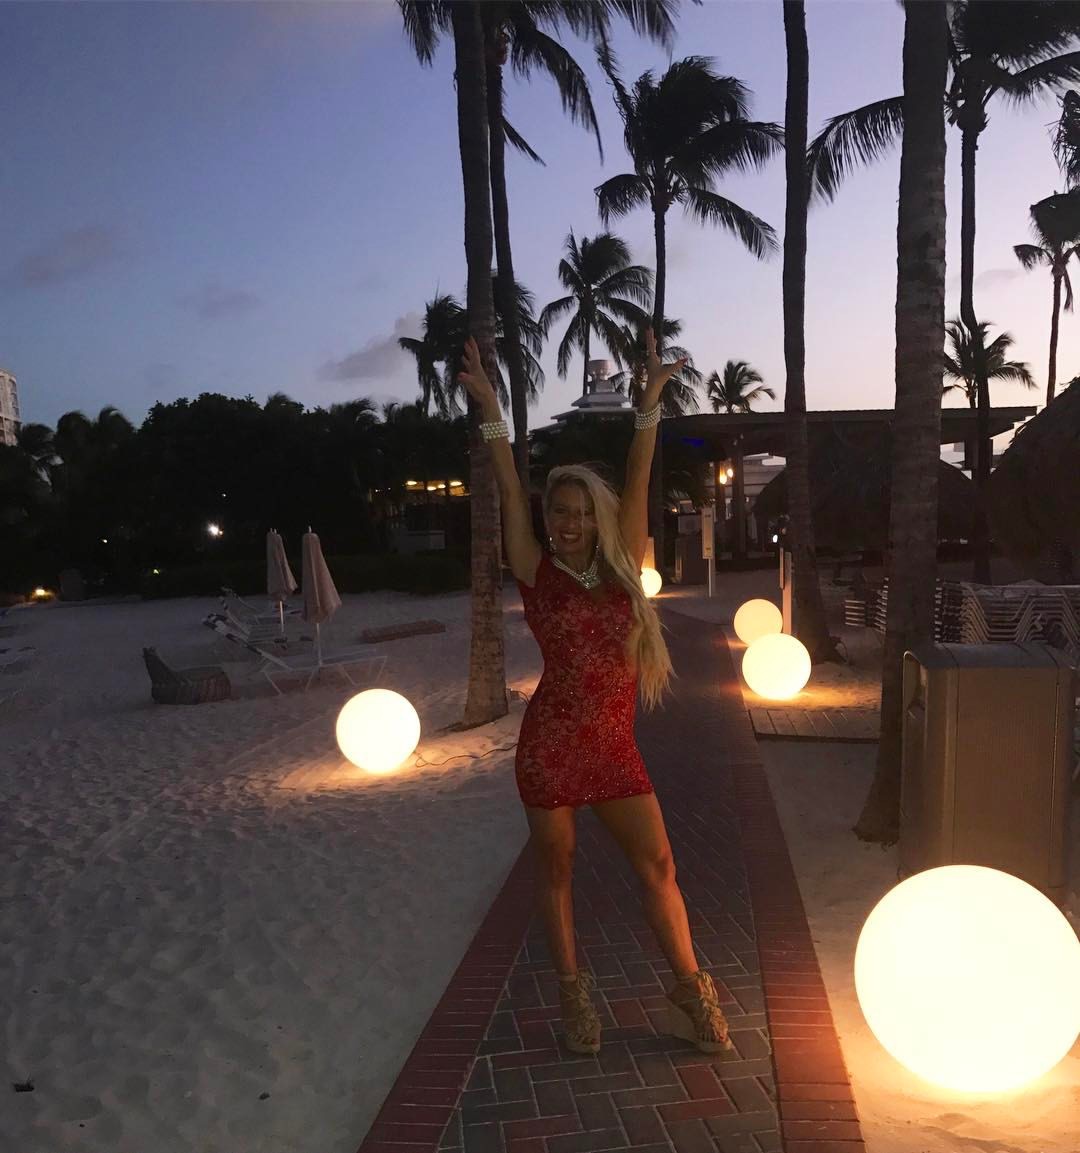 Shawn rene zimmerman health fitness fashion dresses fitness model fitness modeling Aruba beach 